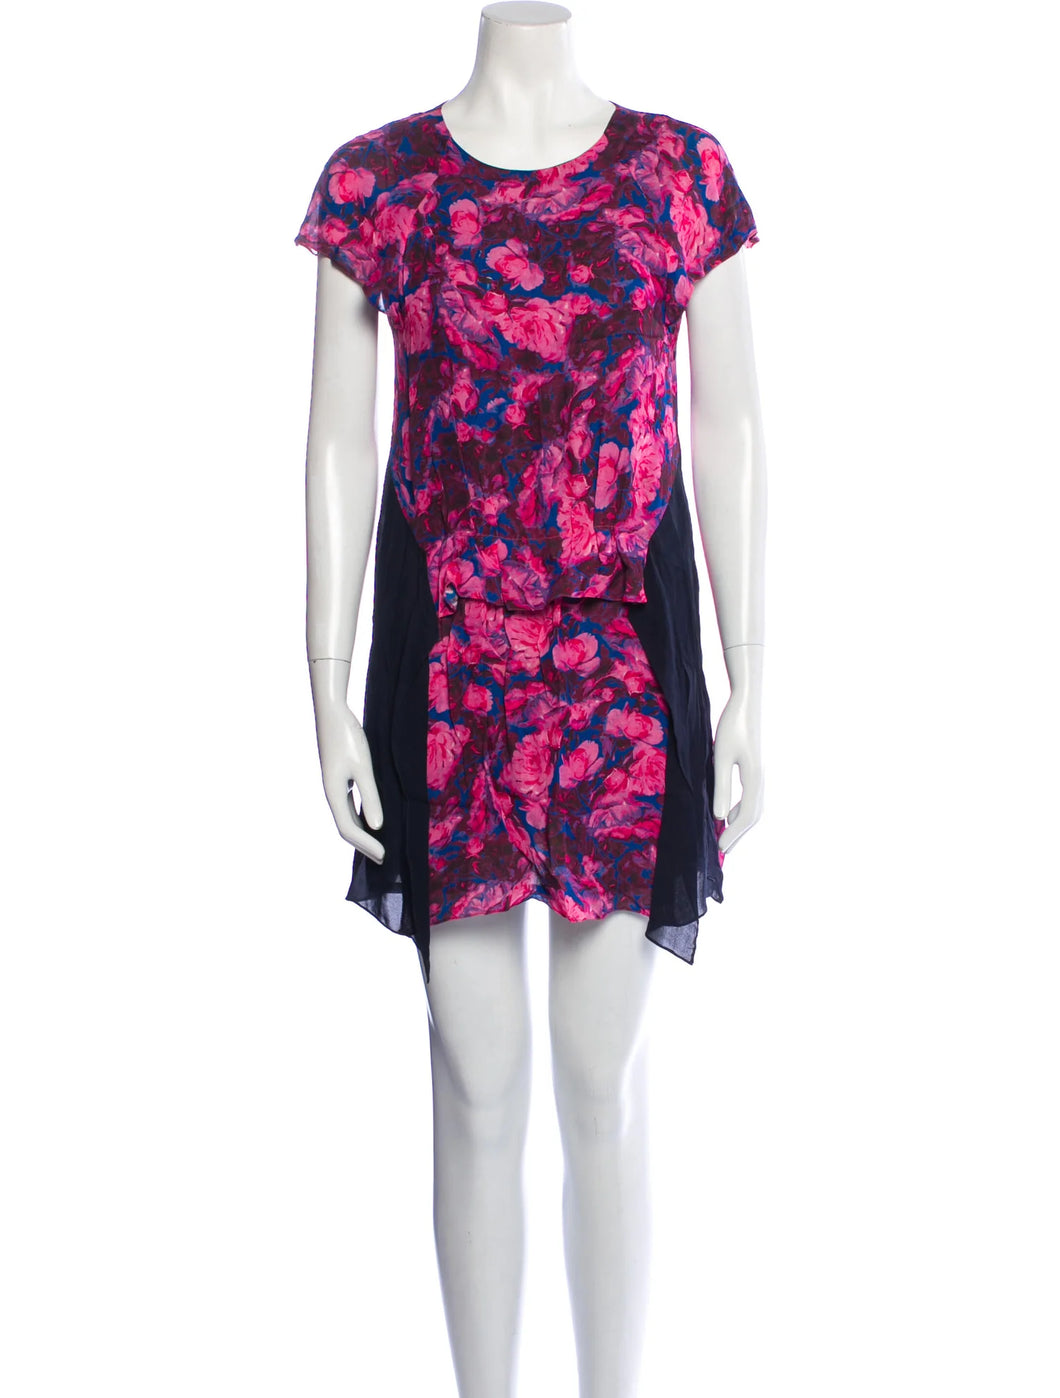 Thakoon Addition Silk Floral Dress- 2